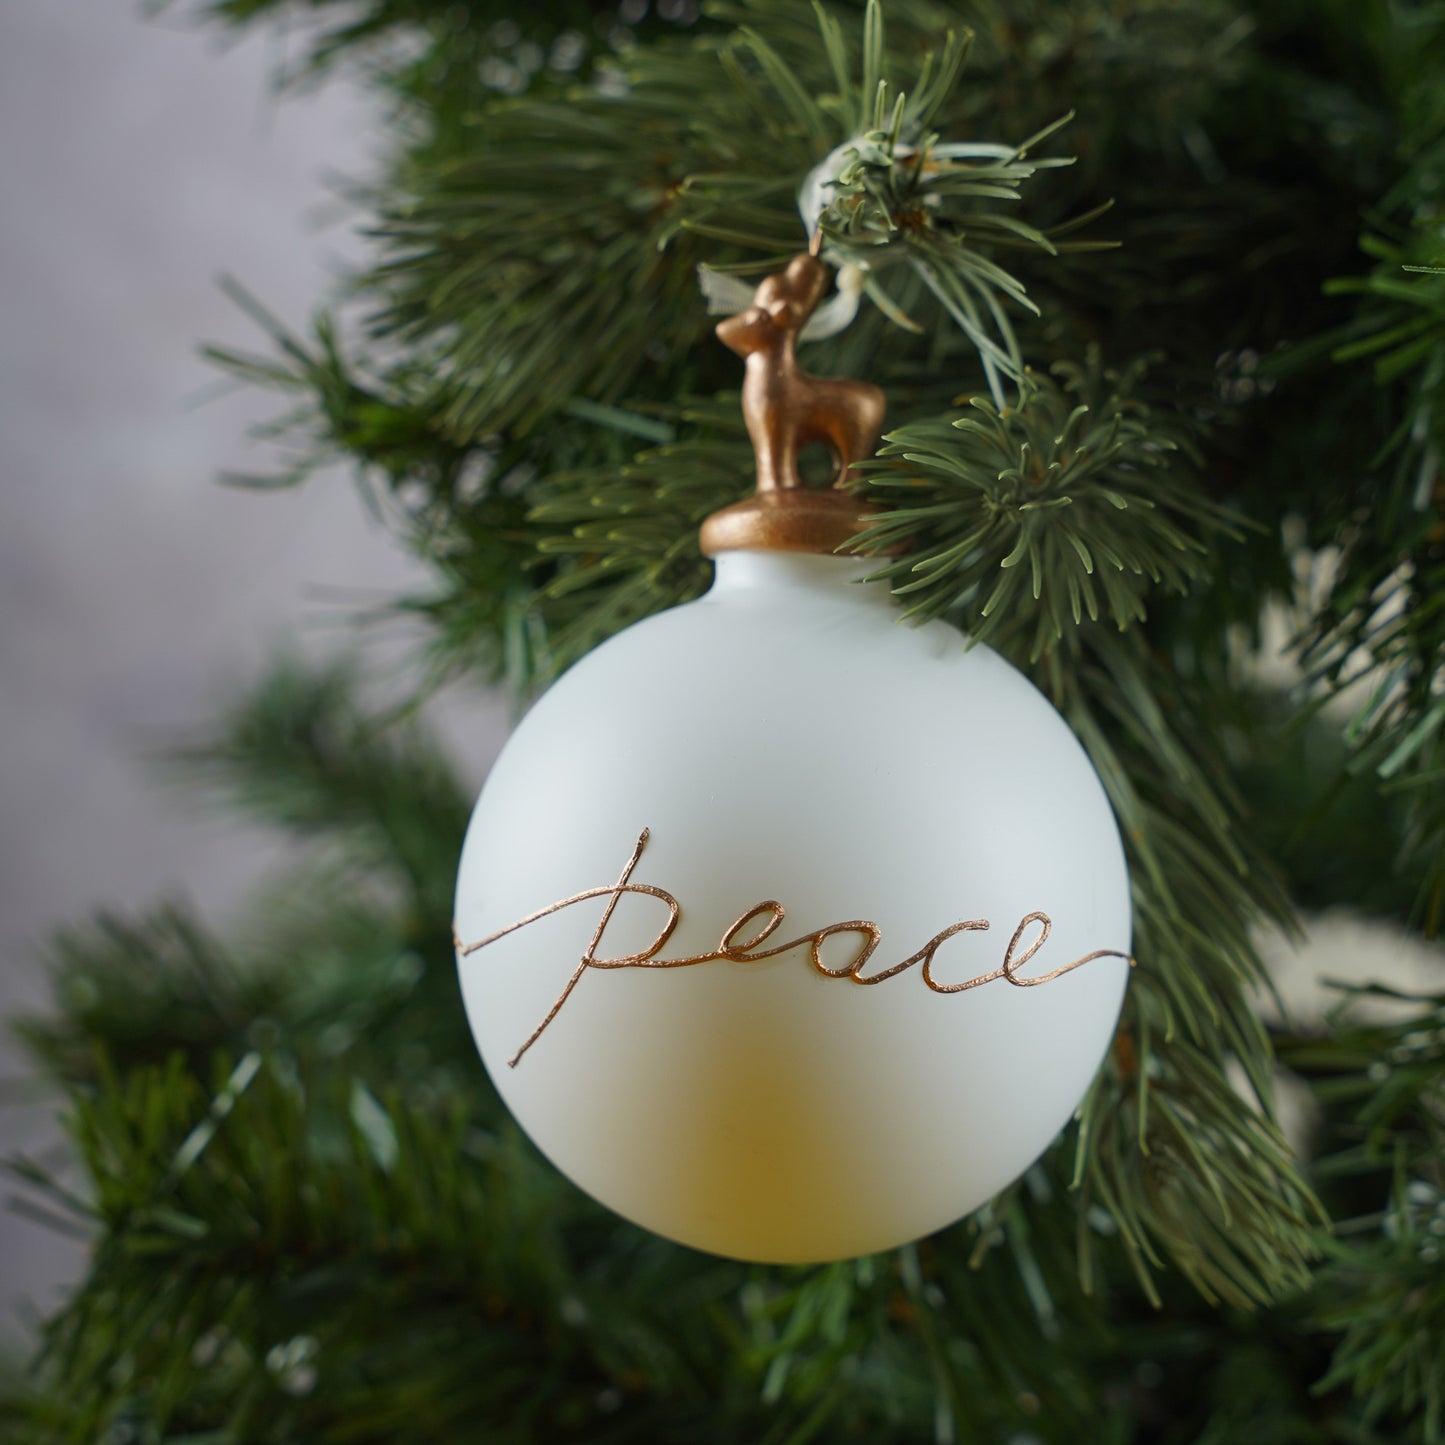 Christmas Ornaments (Joy, Happy, Peace) White